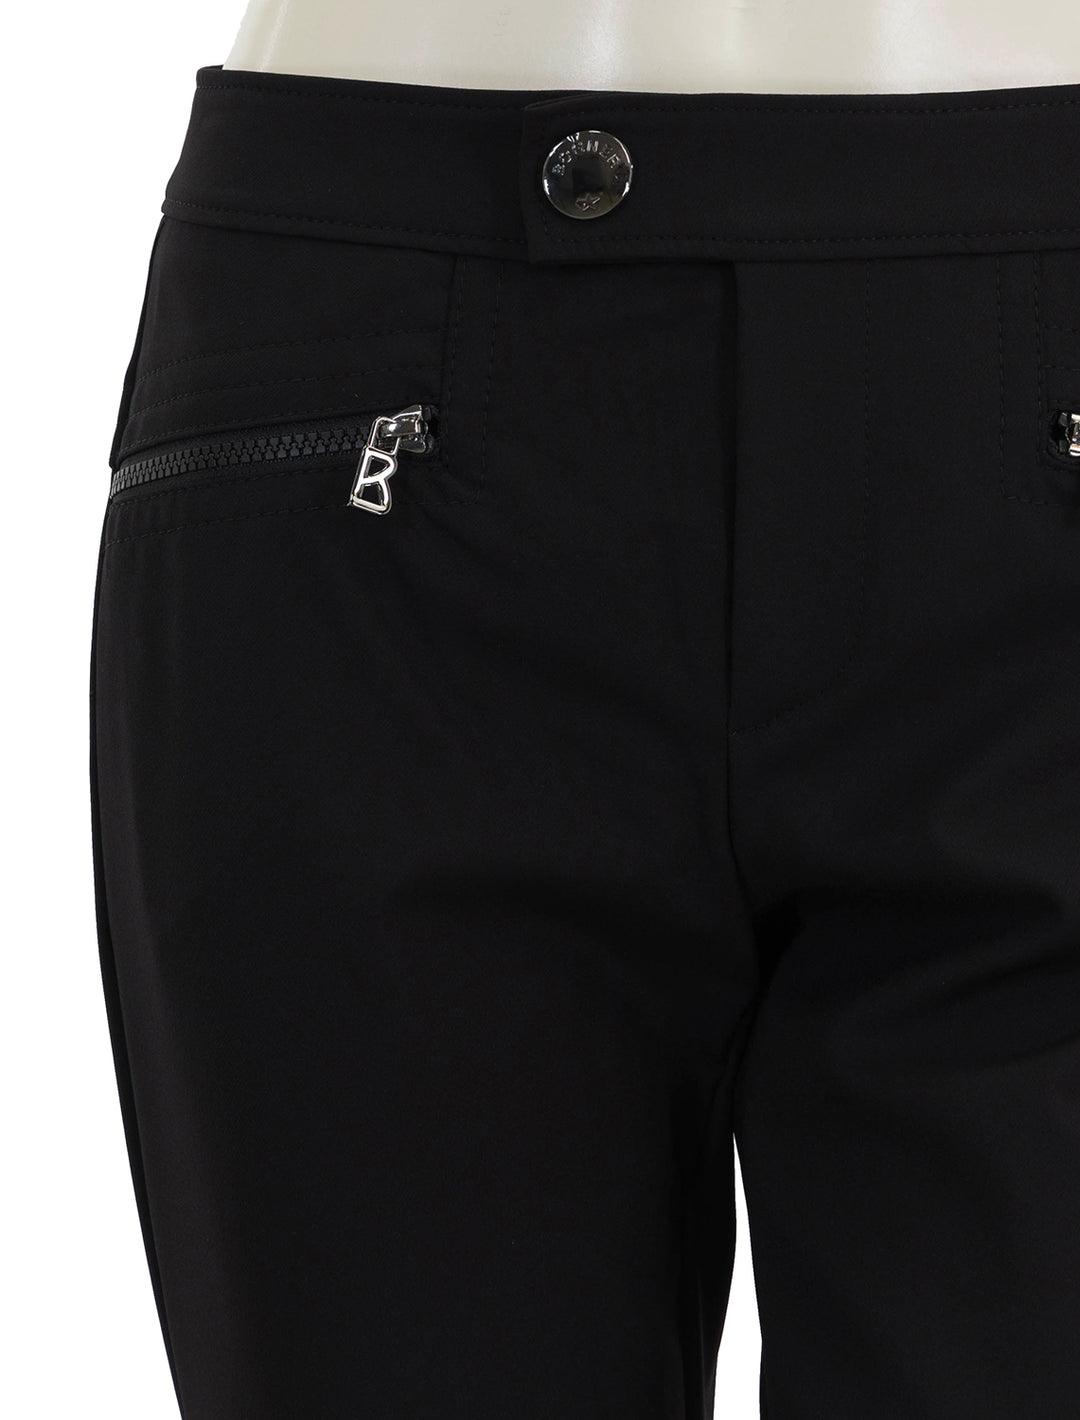 Close-up view of Bogner's lindy pant in black.